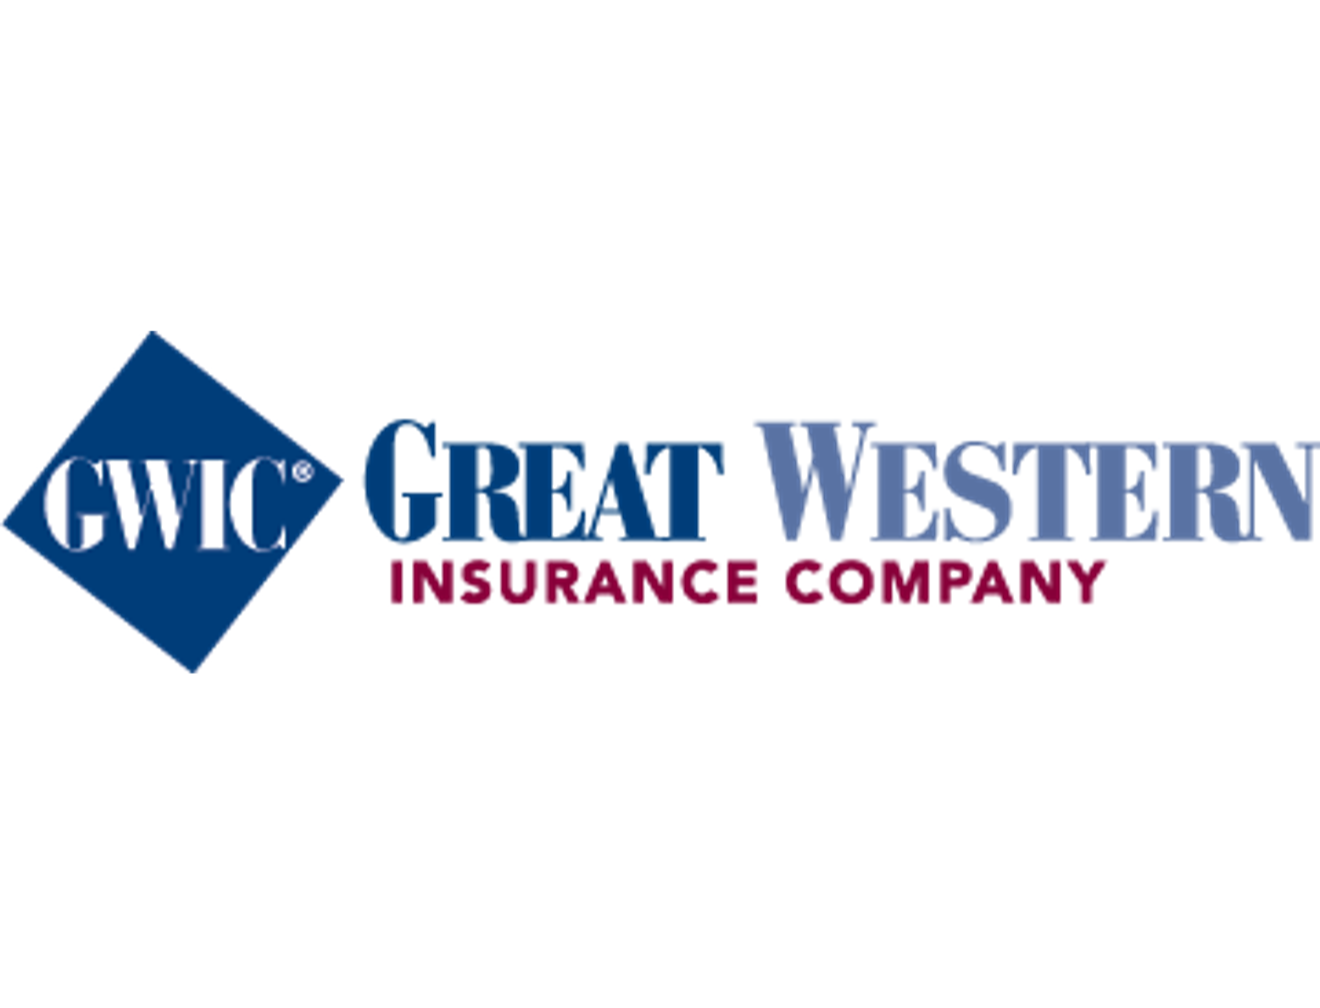 Great Western Insurance Company